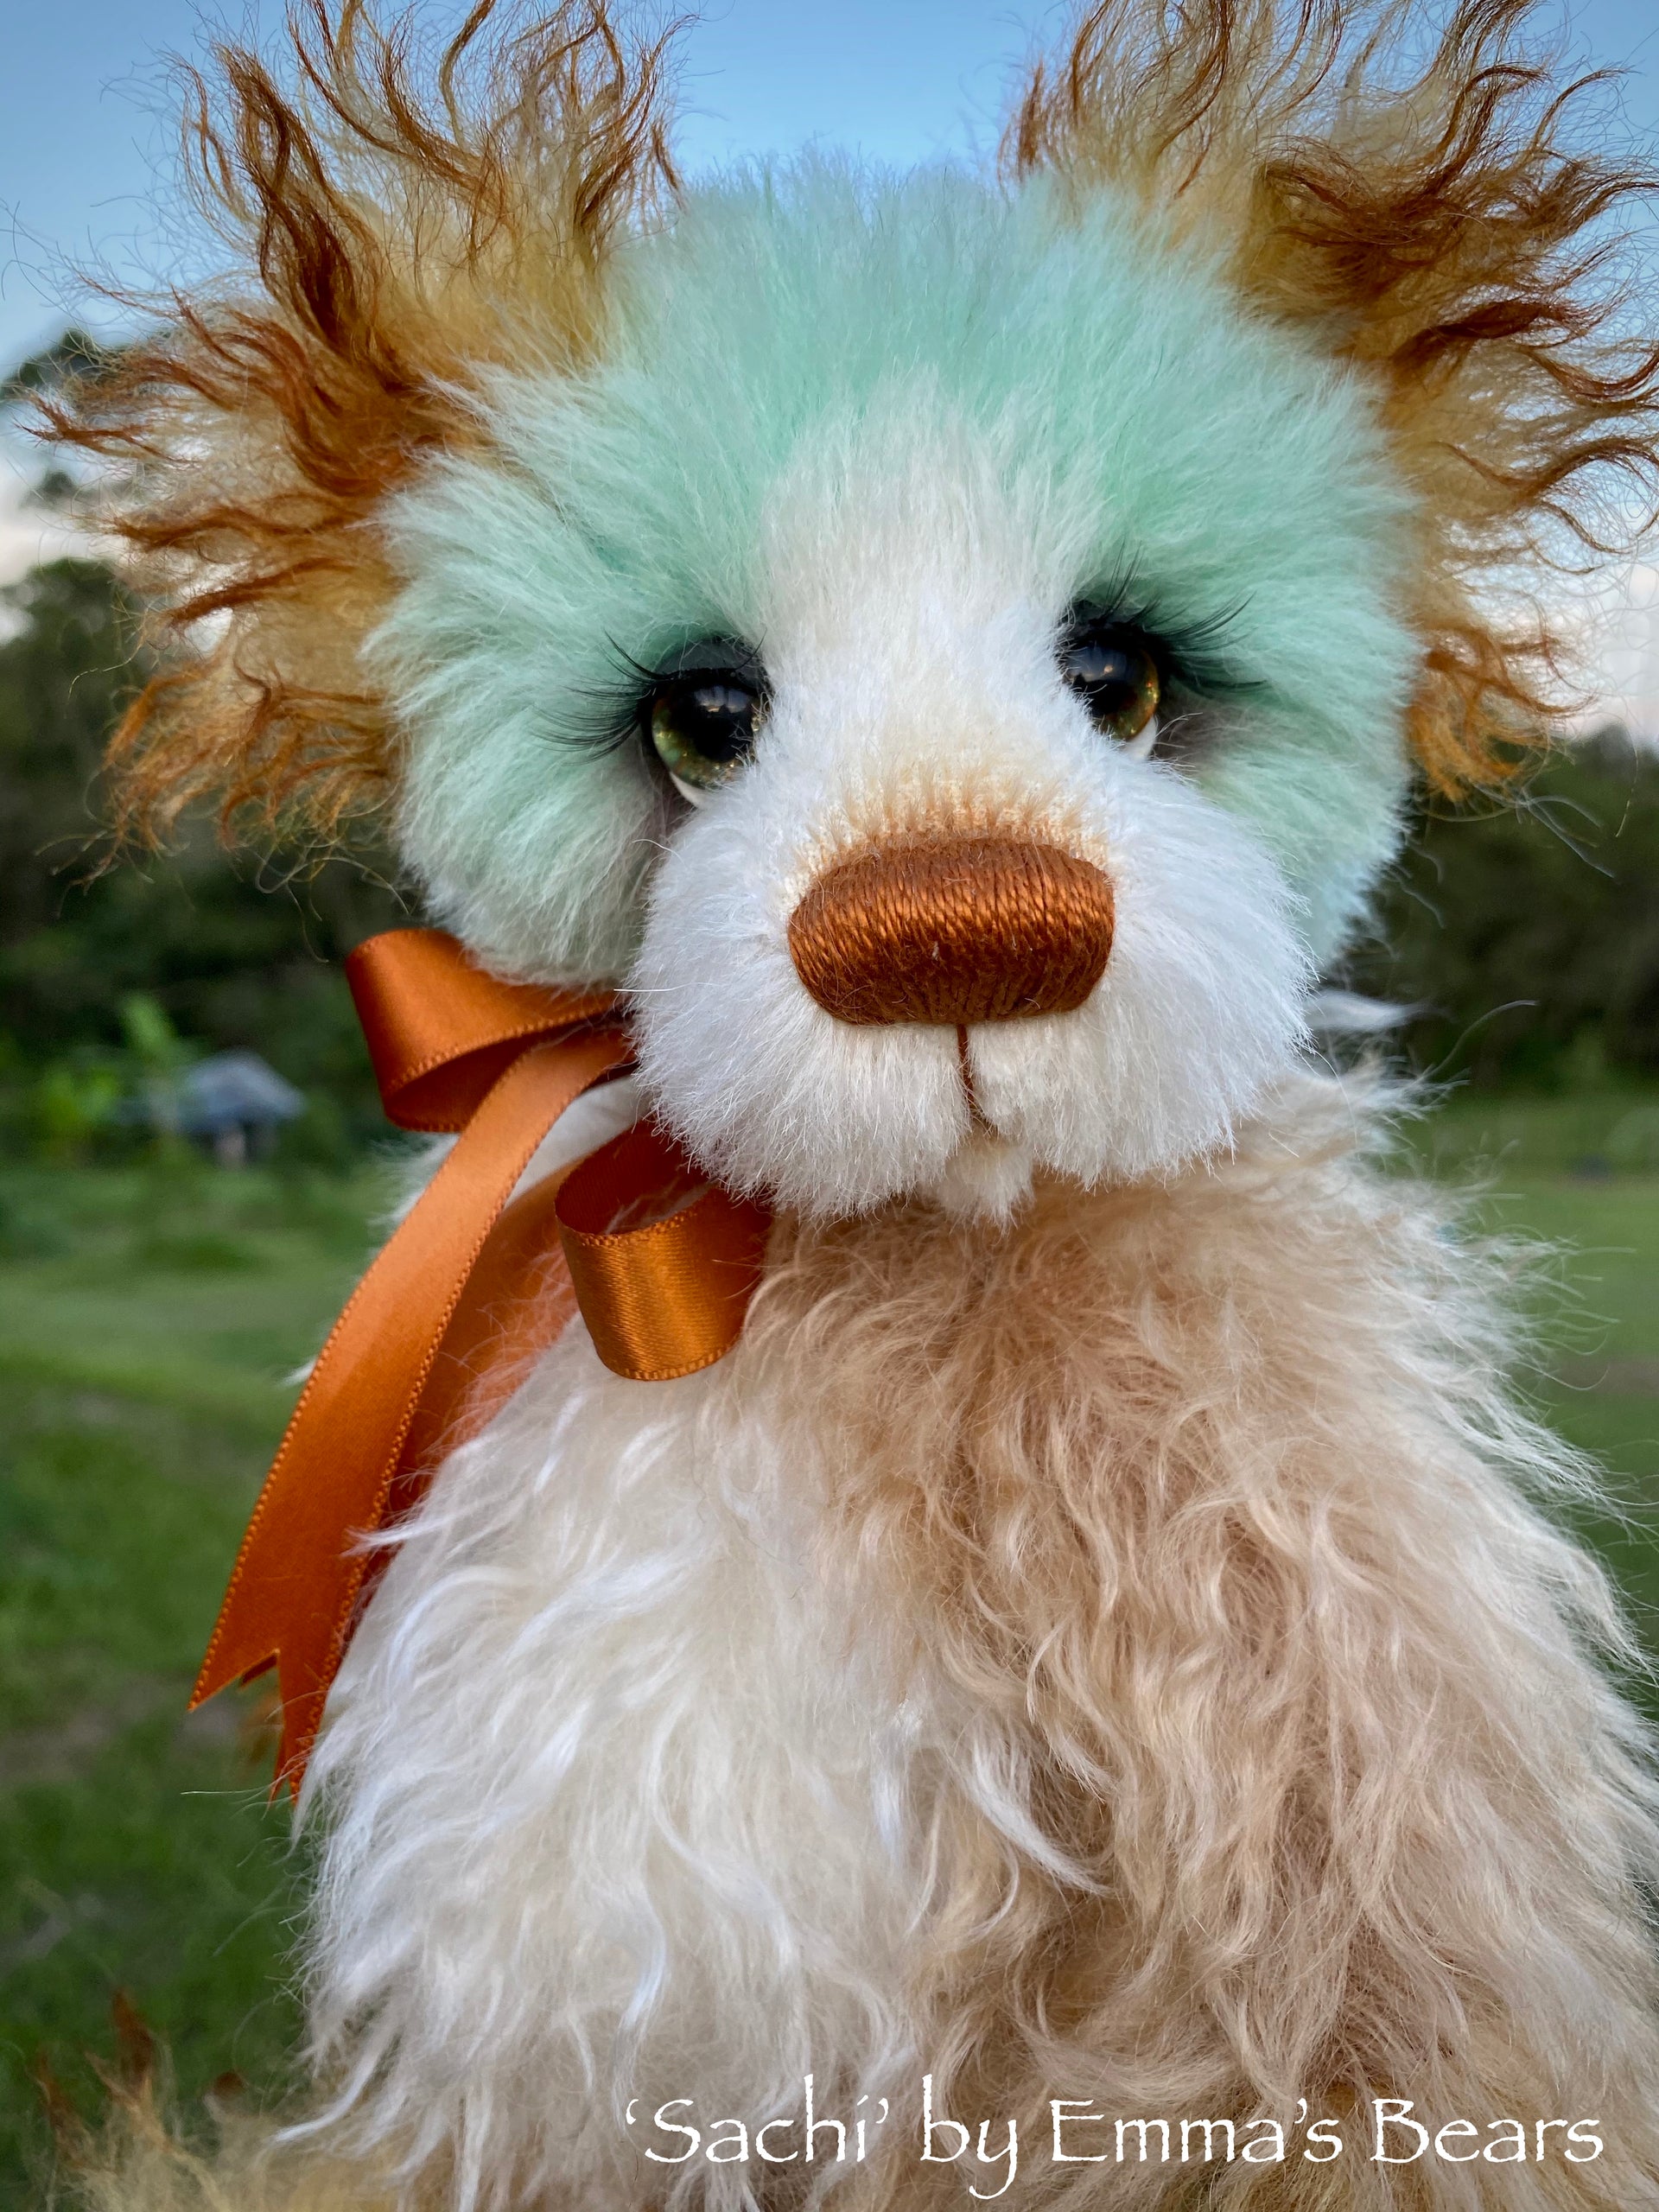 Sachi - 10" Hand Dyed Mohair and Alpaca Artist Bear by Emma's Bears - OOAK